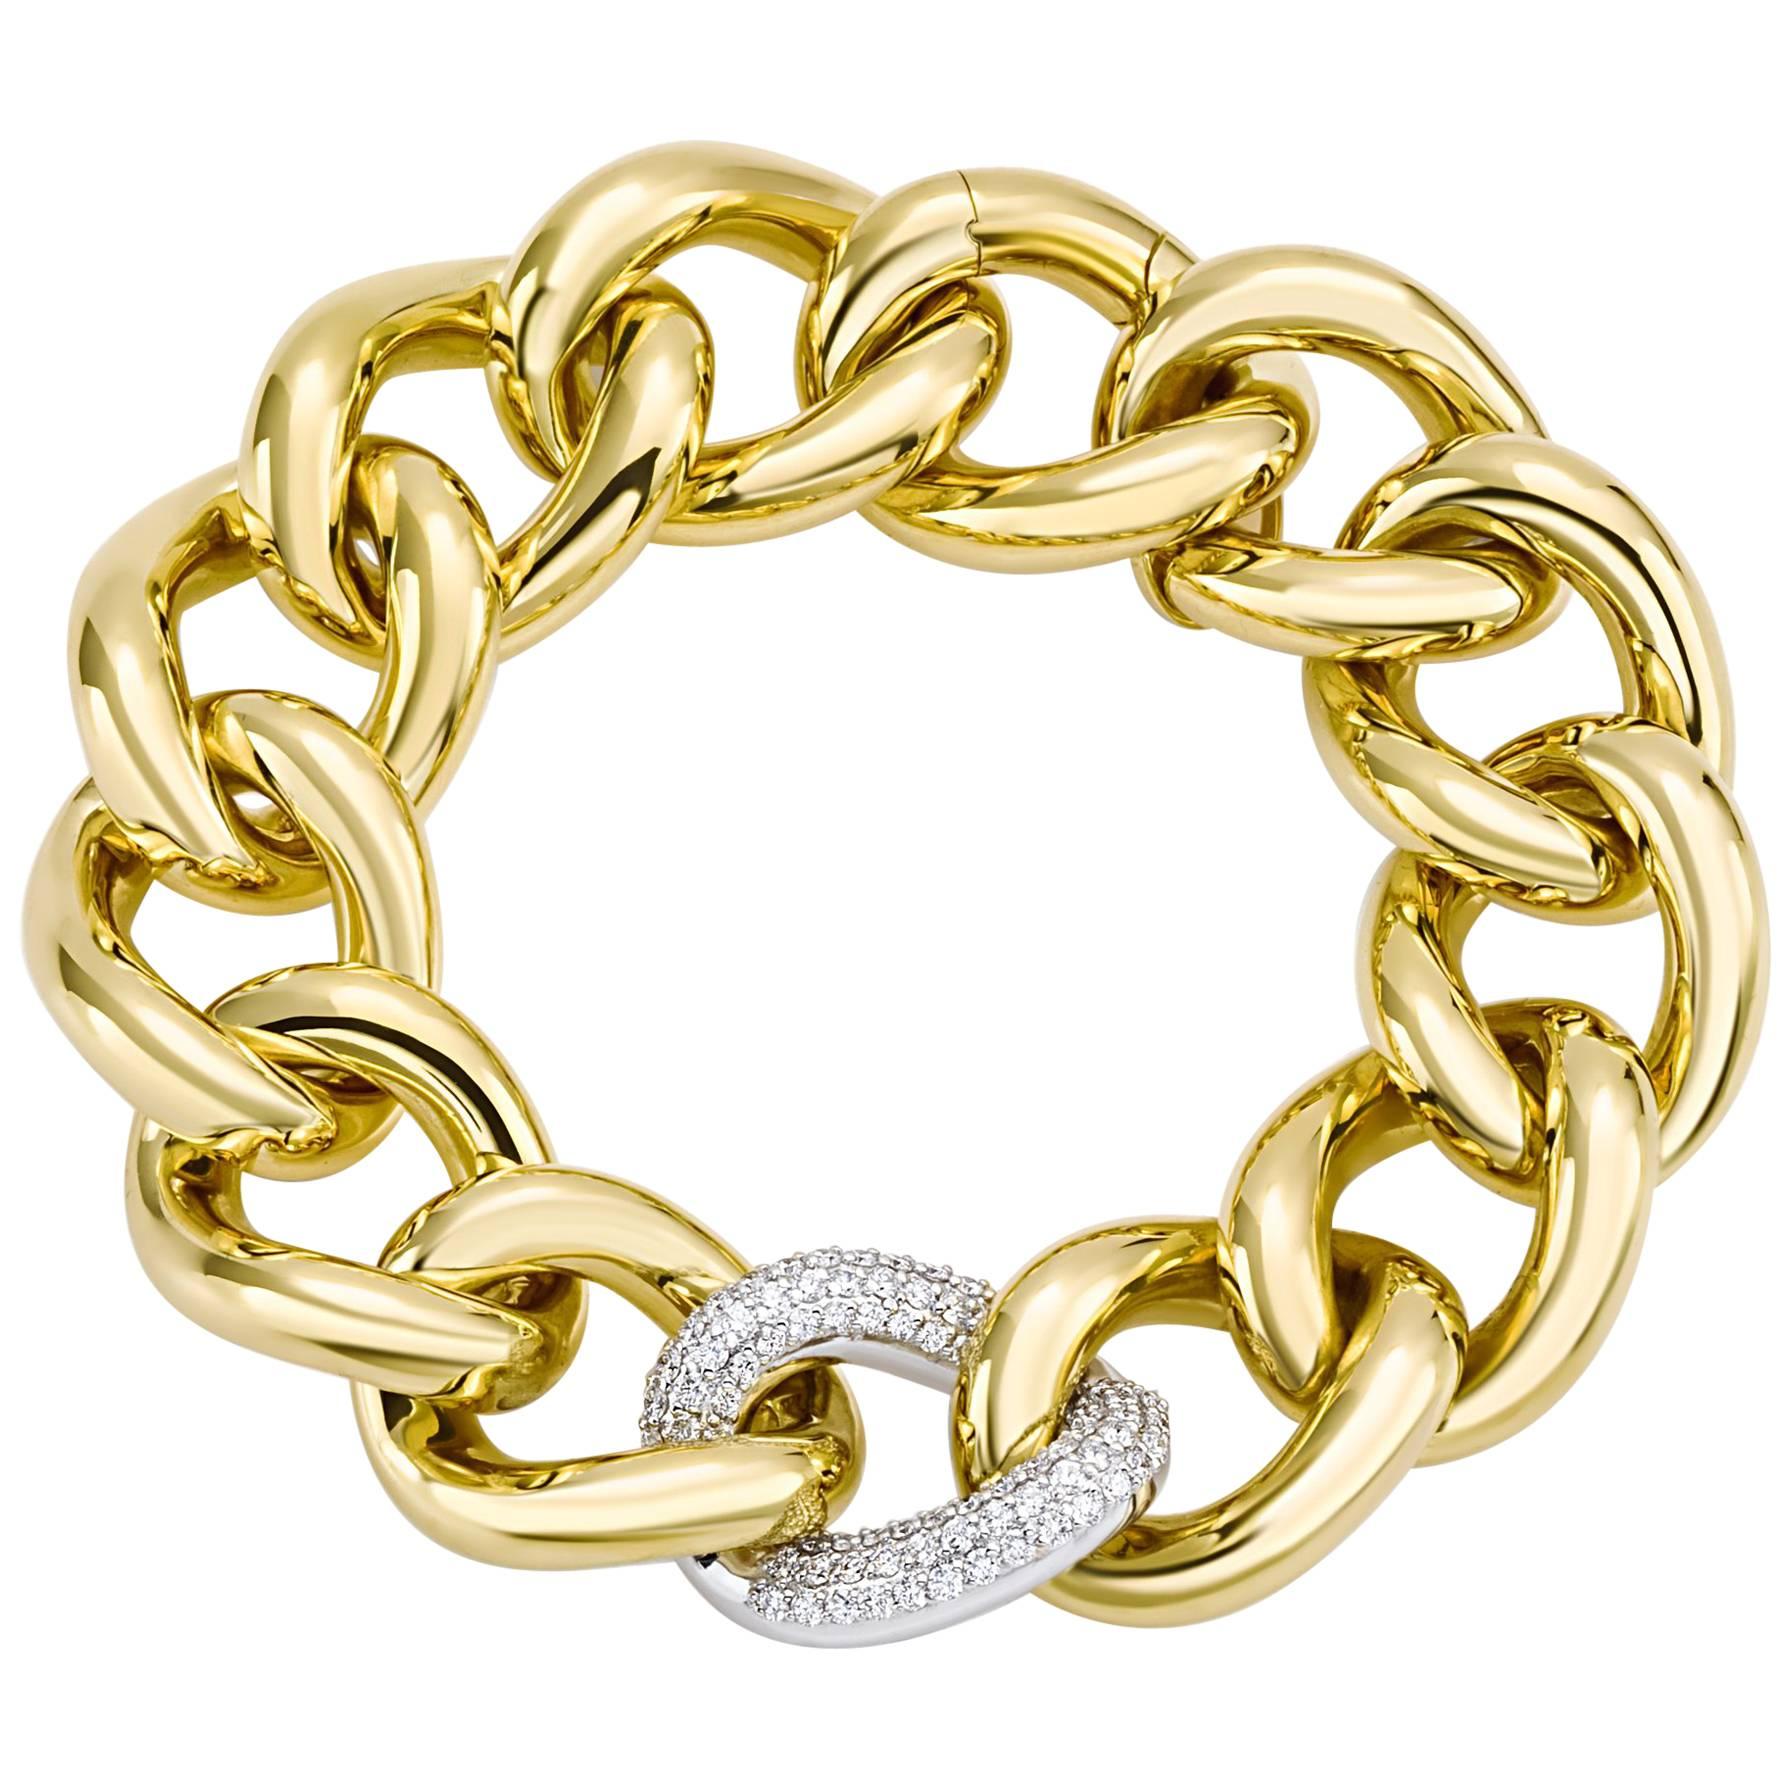 Classic Groumette Bracelet 18 Karat Yellow Gold and White Diamond